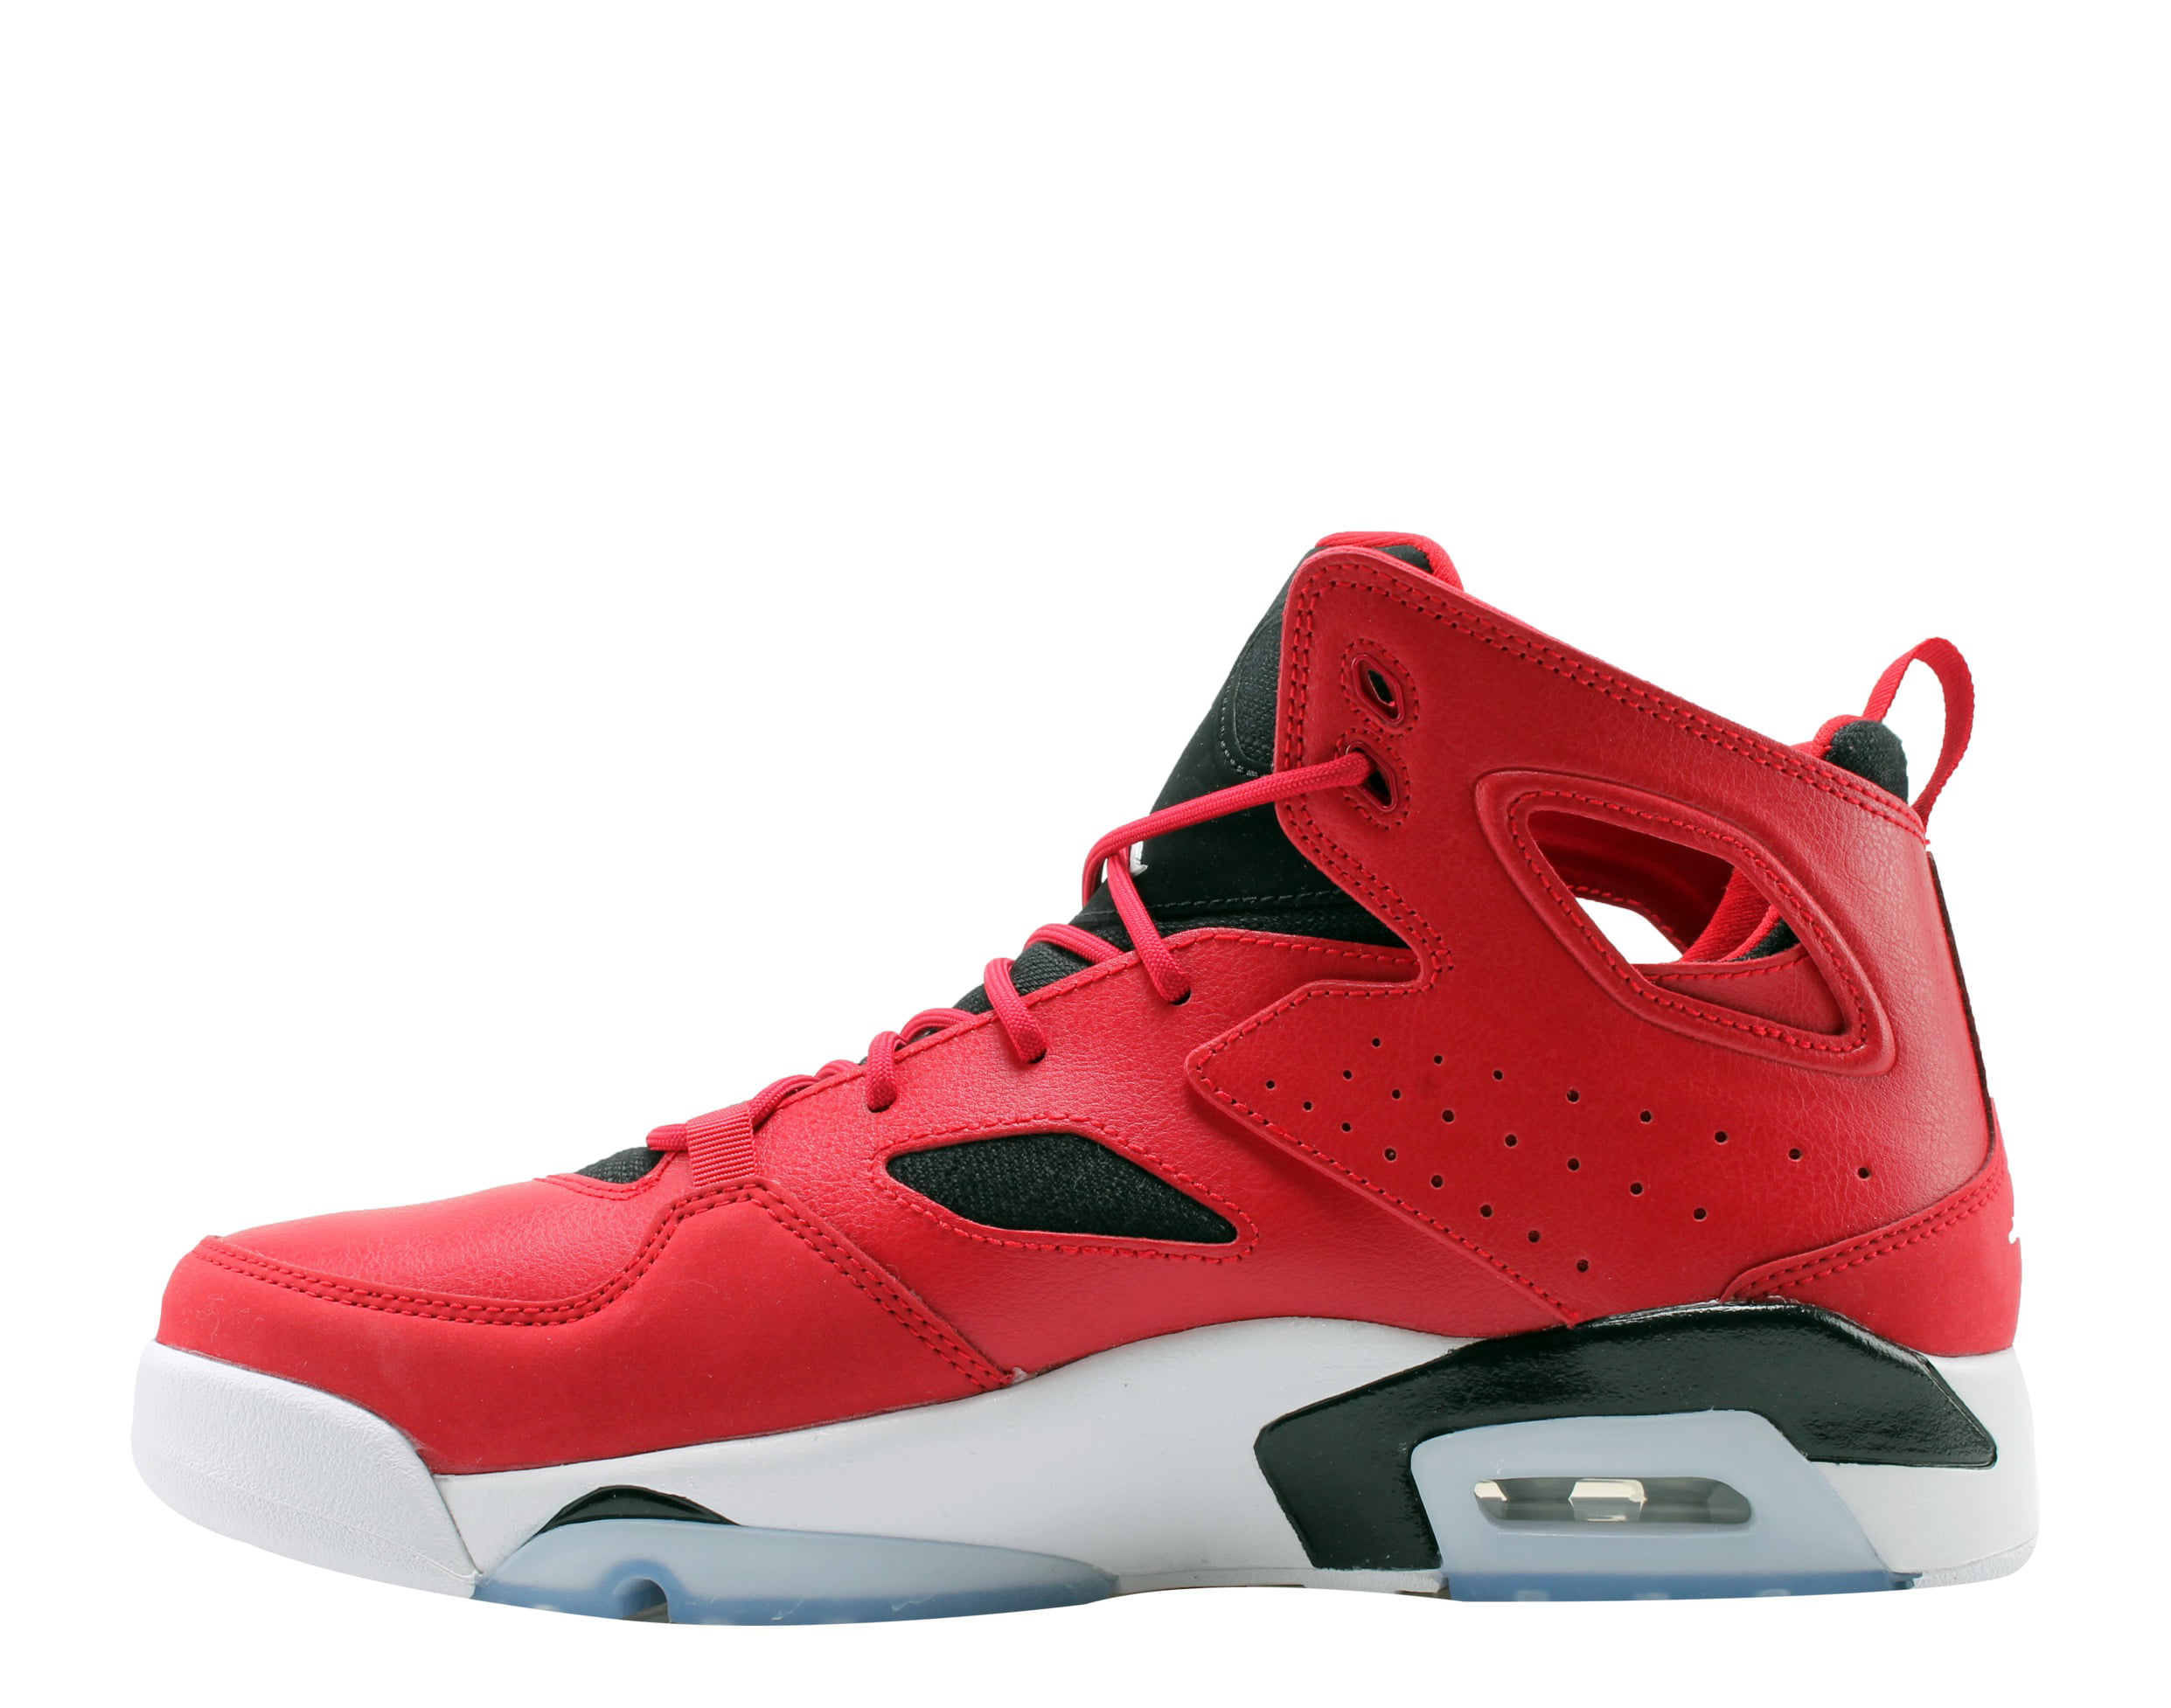 Nike Air Jordan Flight '91 Gym Red/Black Men's Basketball Shoes 555475-600